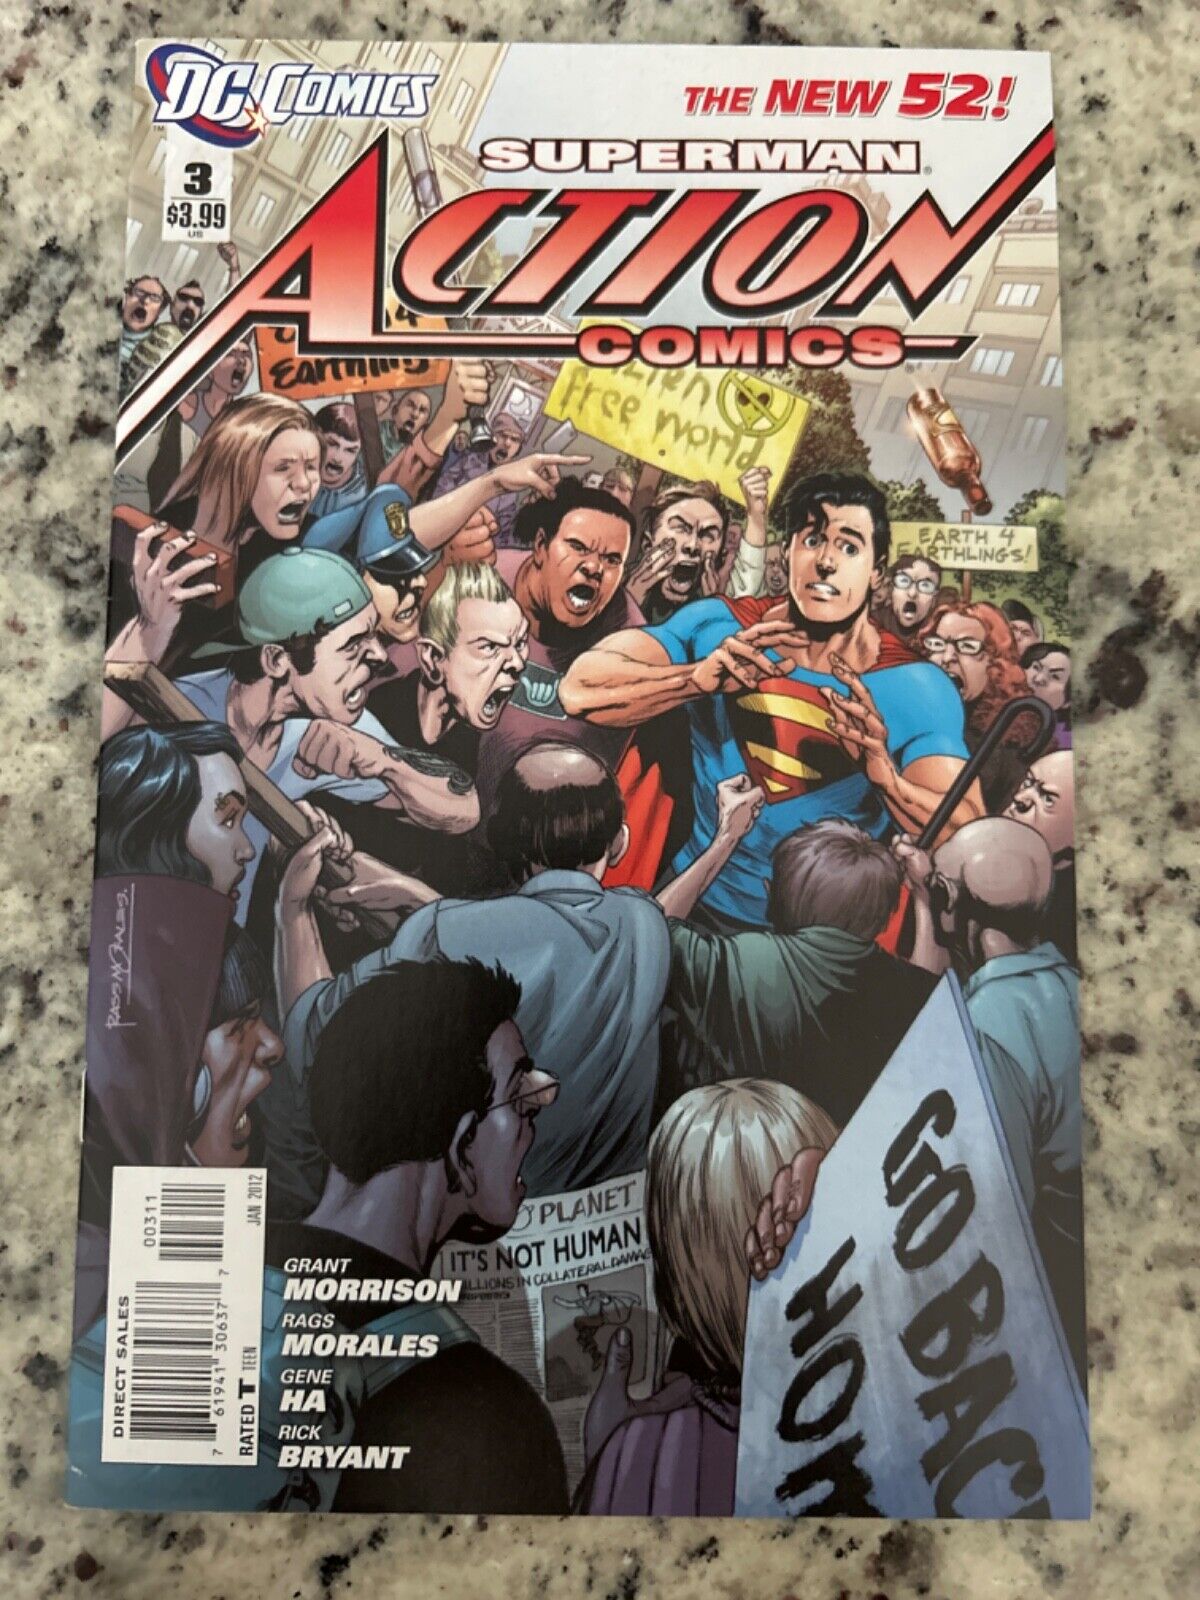 Superman #3 Vol. 2 (DC, 2012) vf